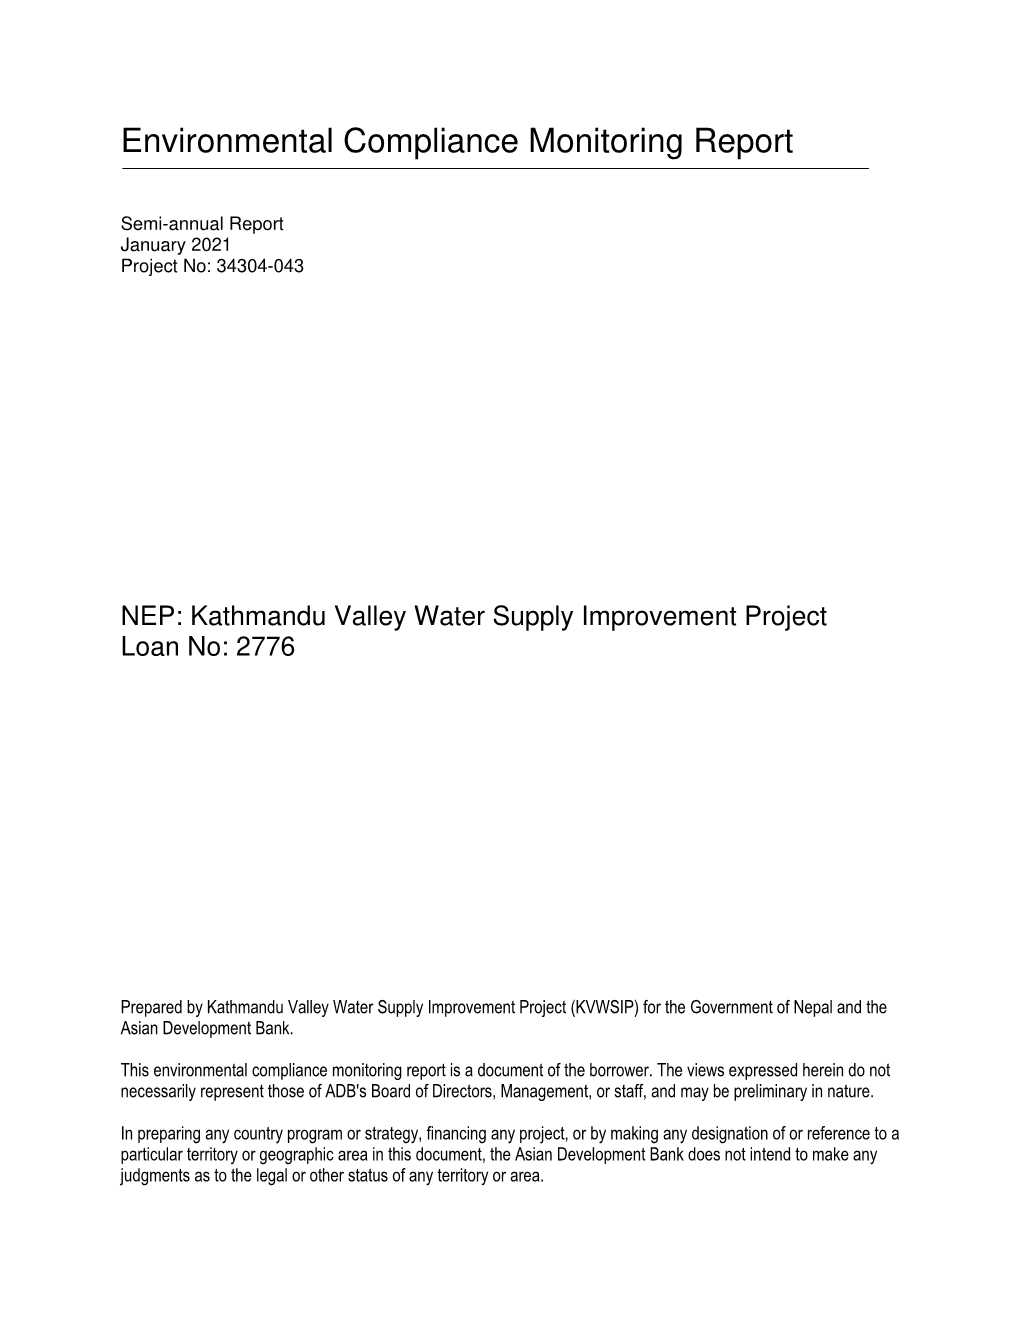 Kathmandu Valley Water Supply Improvement Project Loan No: 2776